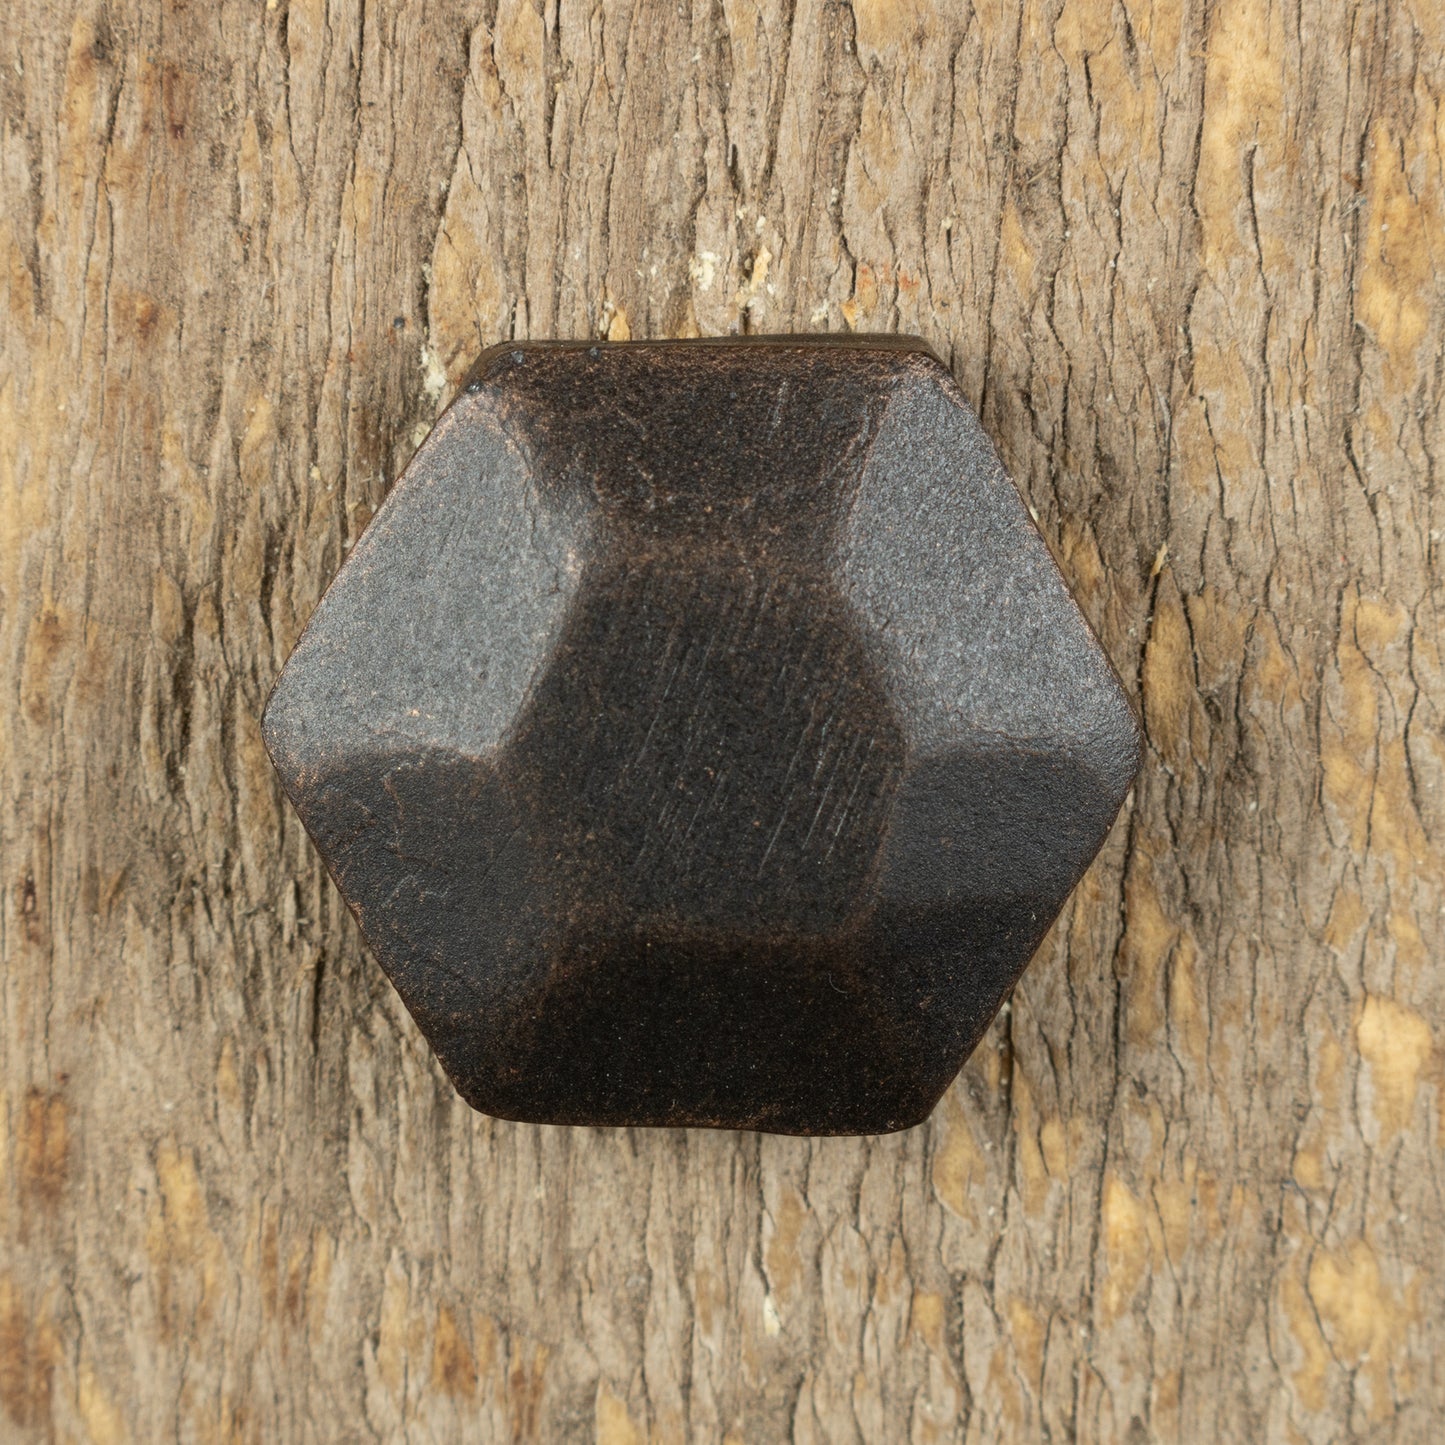 Perno de cabeza hexagonal piramidal de 3/4" de diámetro